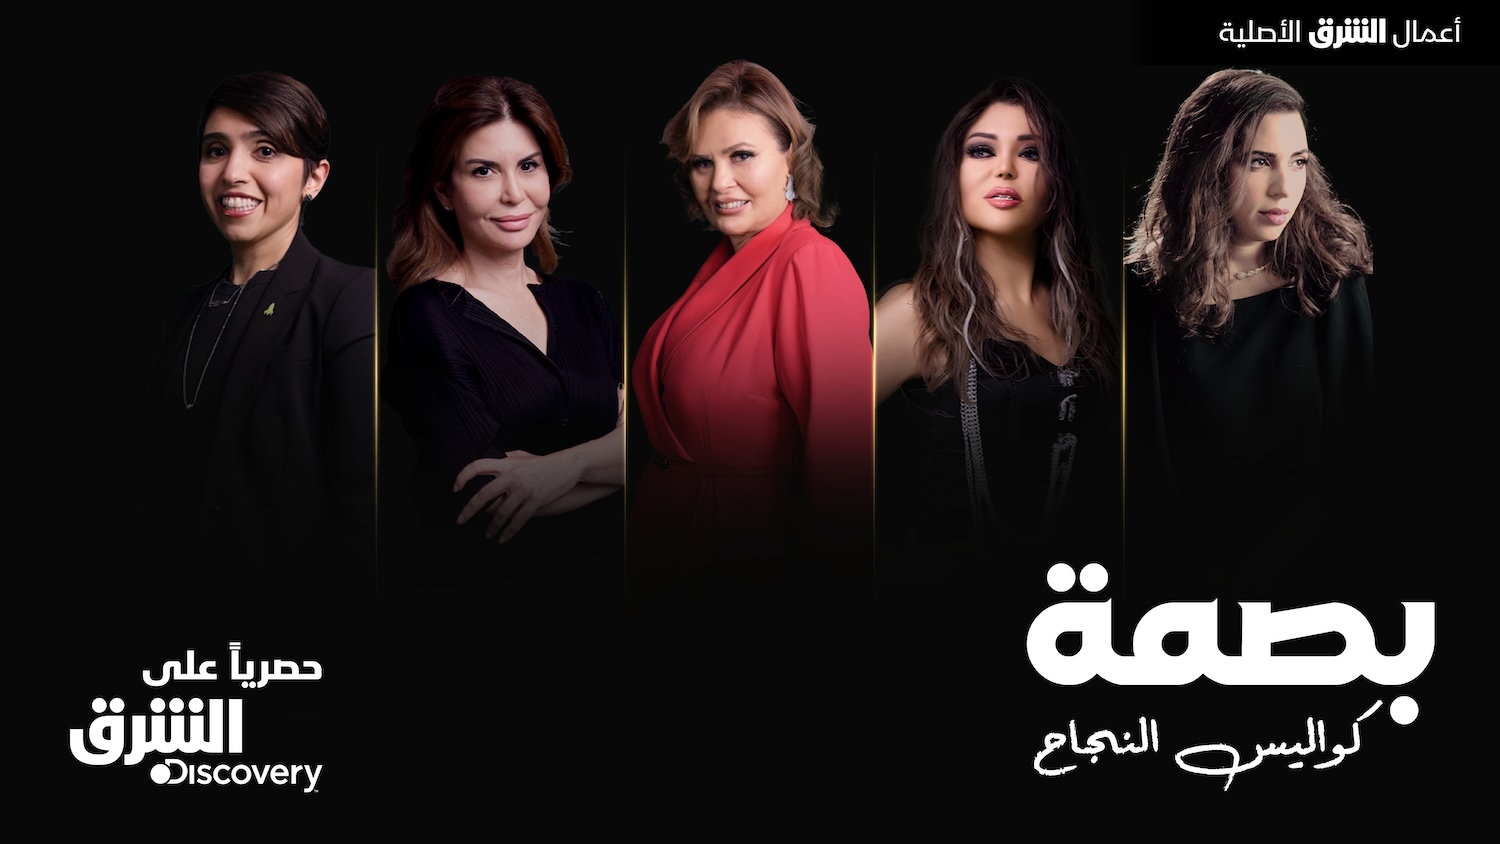 Asharq Discovery’s new original show ‘Bassma’ showcases the inspiring journeys of trailblazing Arab women